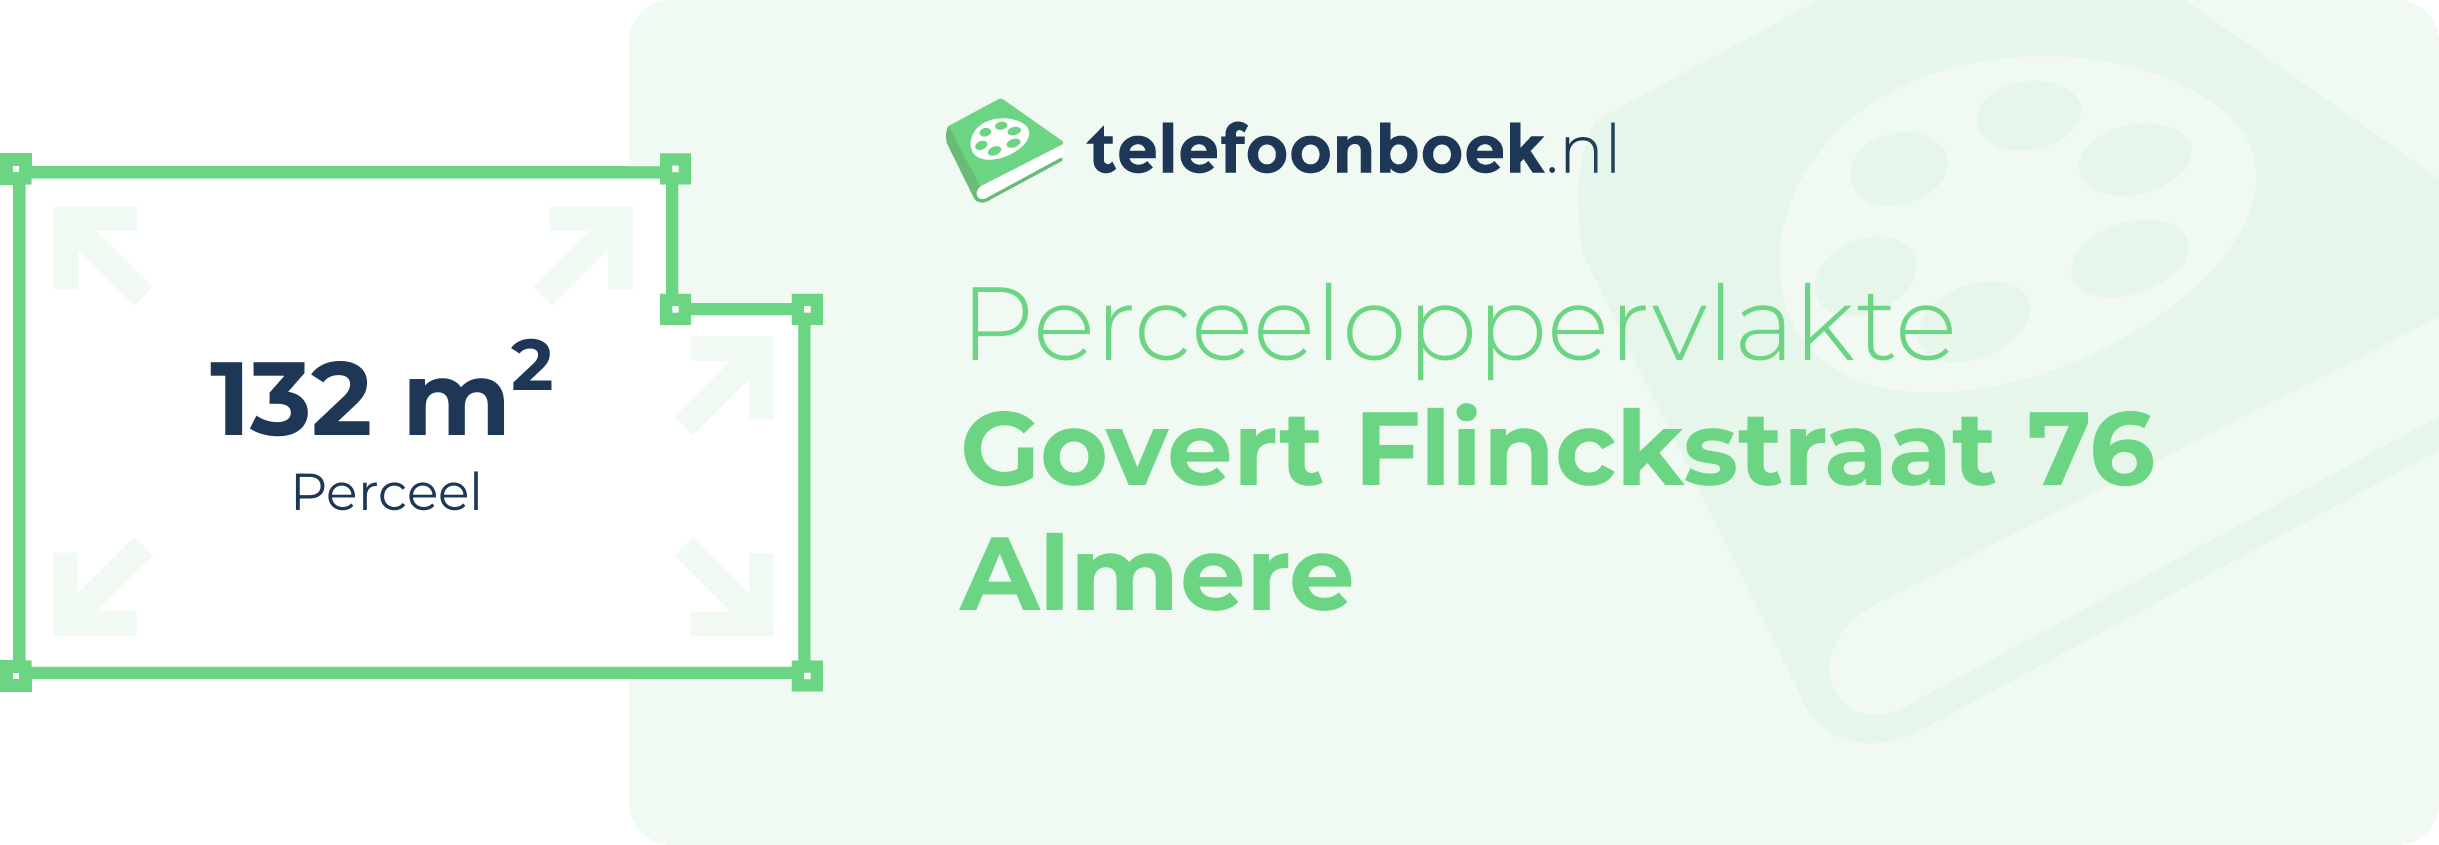 Perceeloppervlakte Govert Flinckstraat 76 Almere